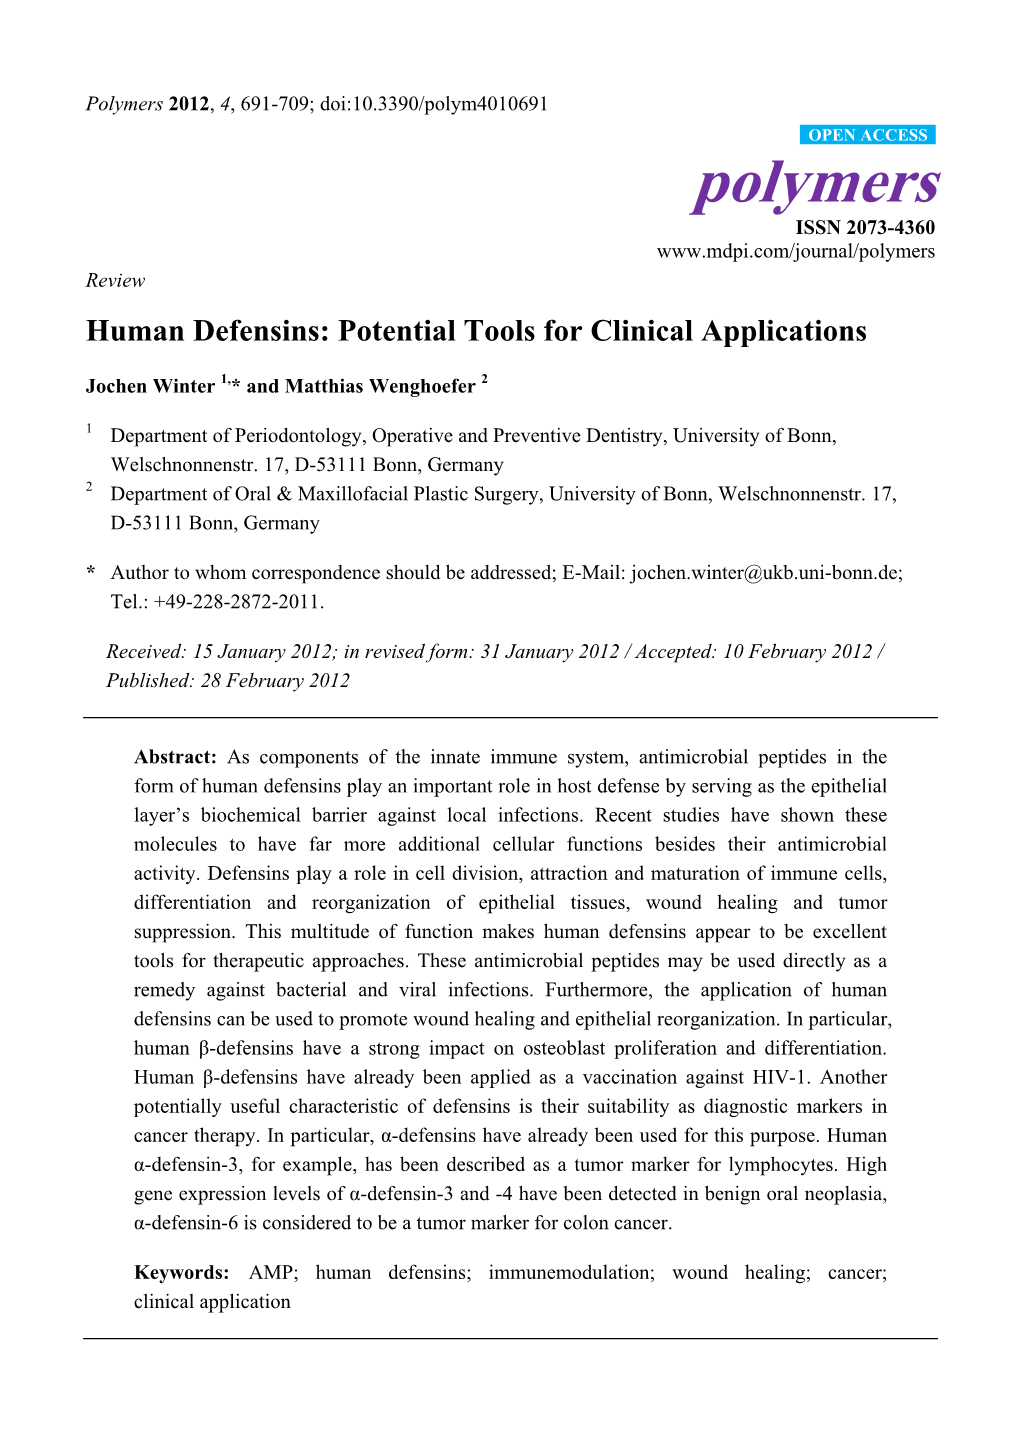 Human Defensins: Potential Tools for Clinical Applications